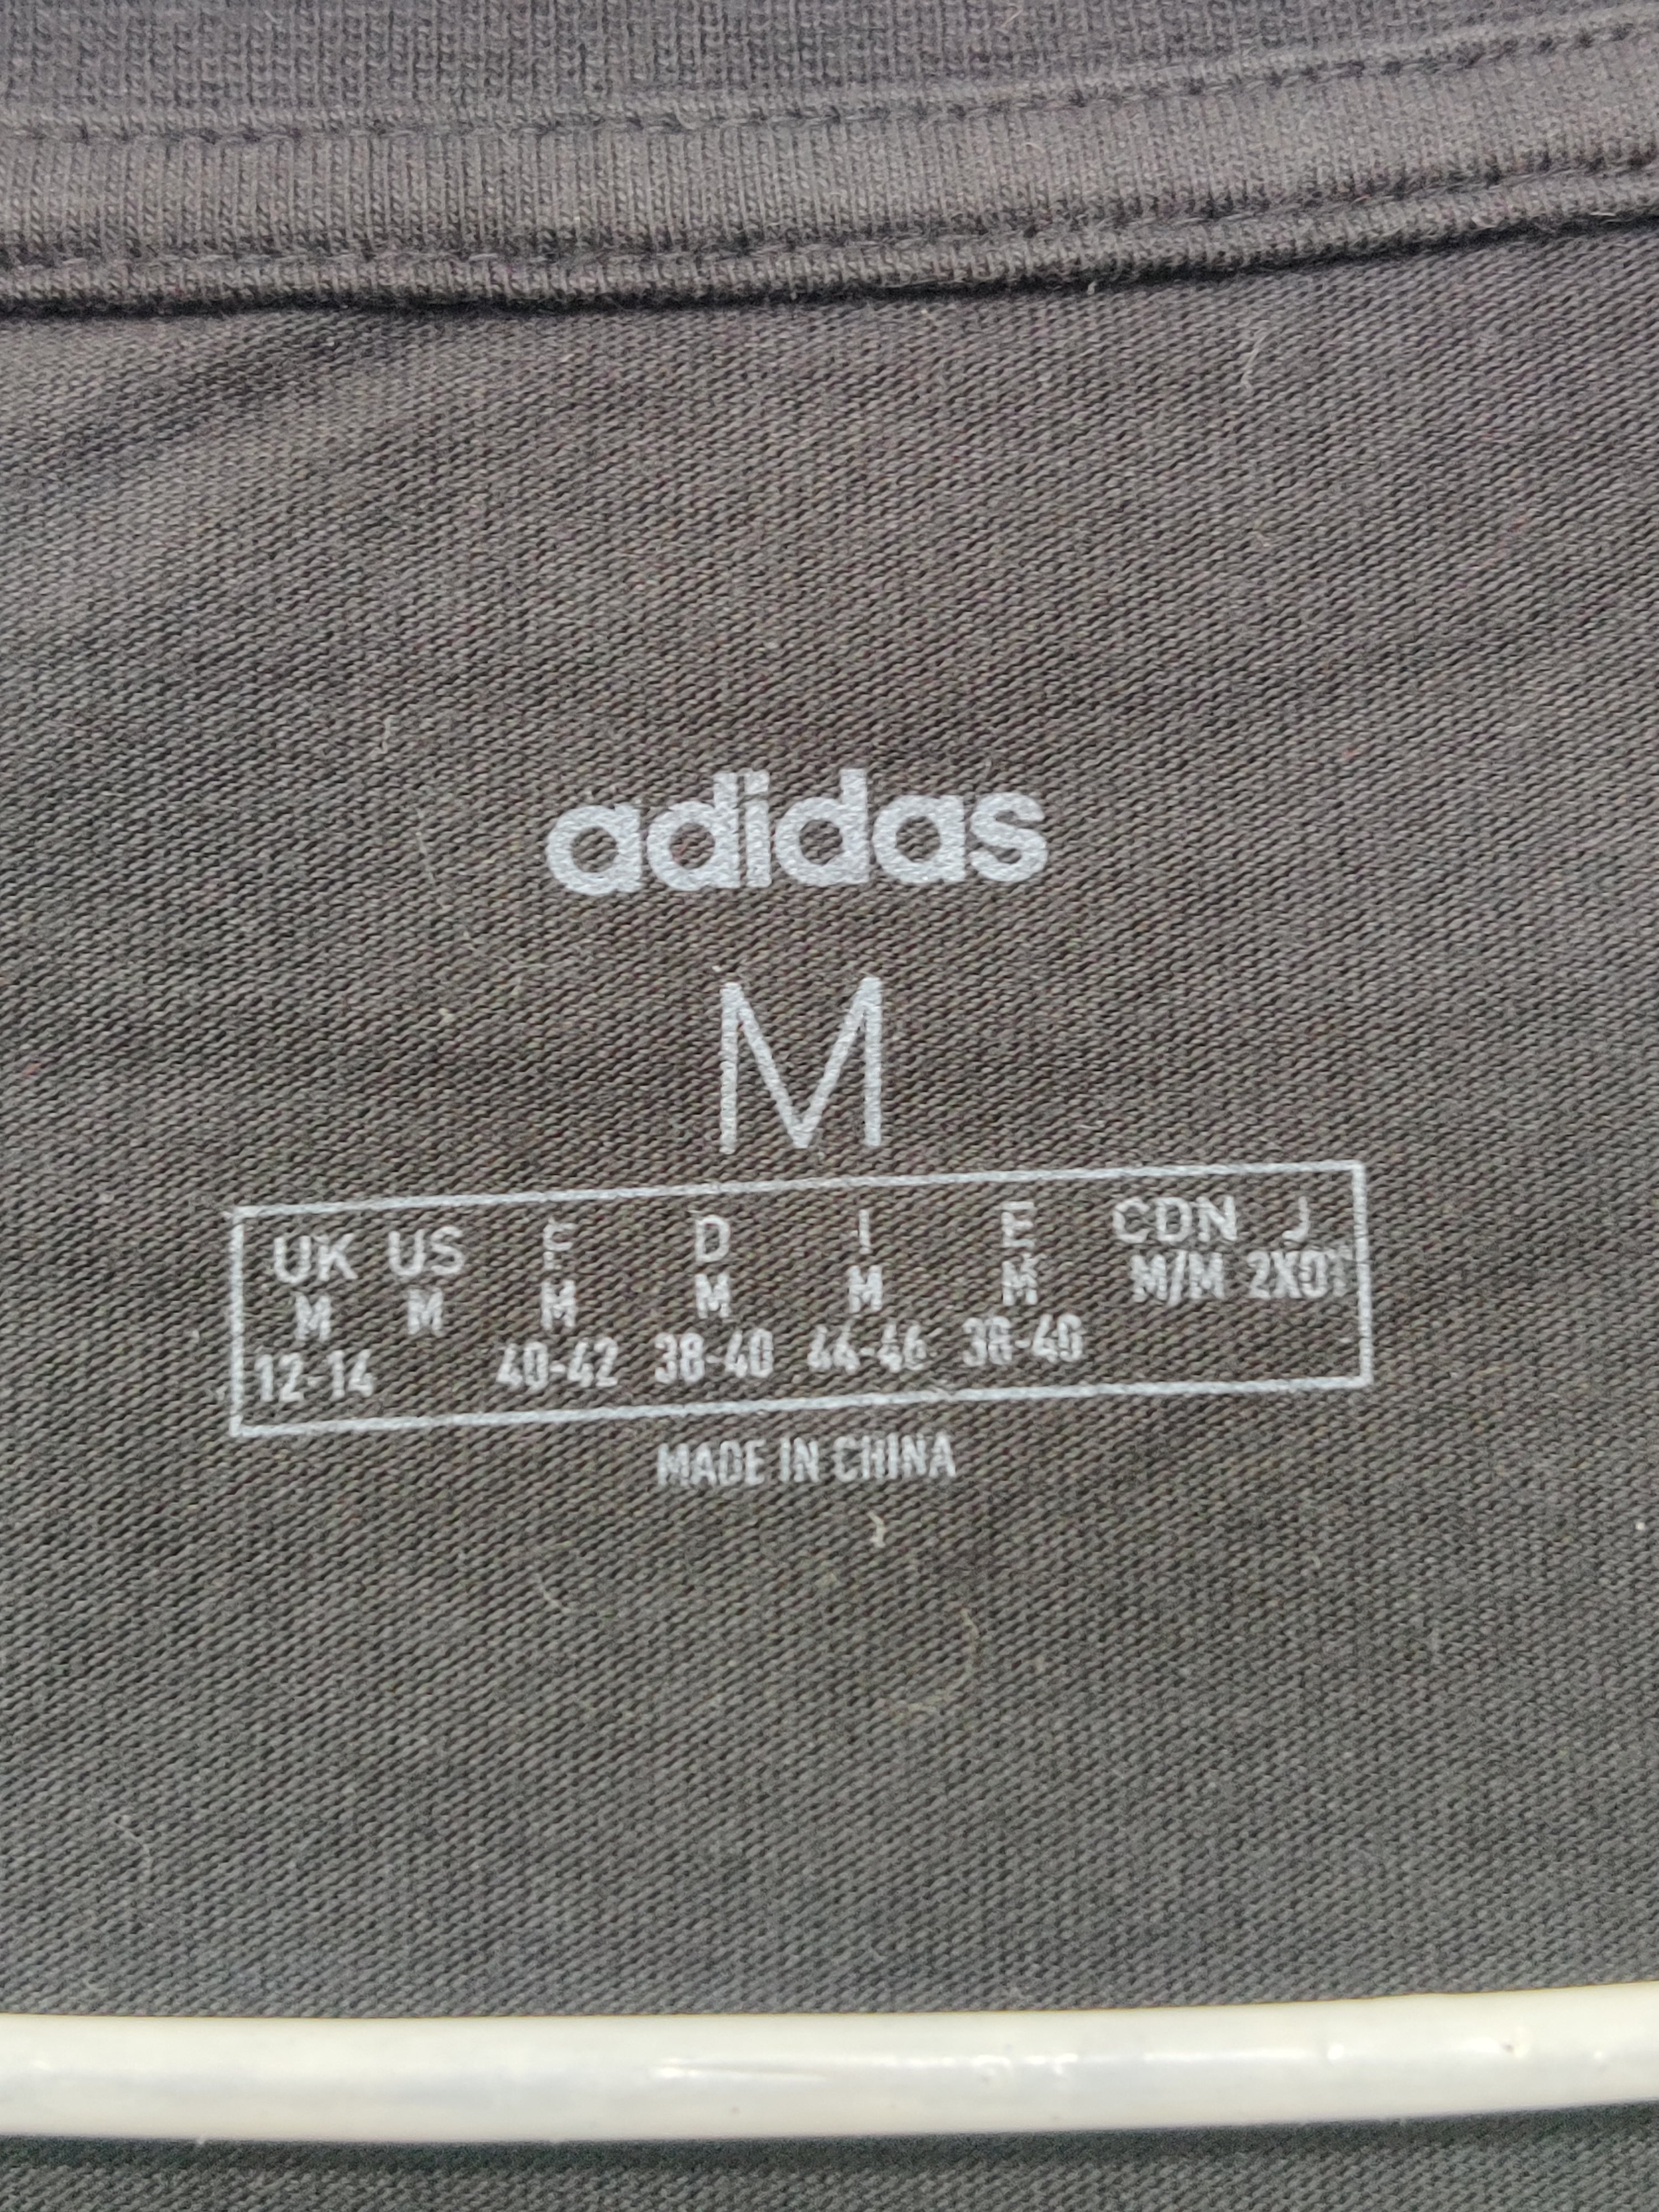 Adidas Branded Original For Sports Women T Shirt